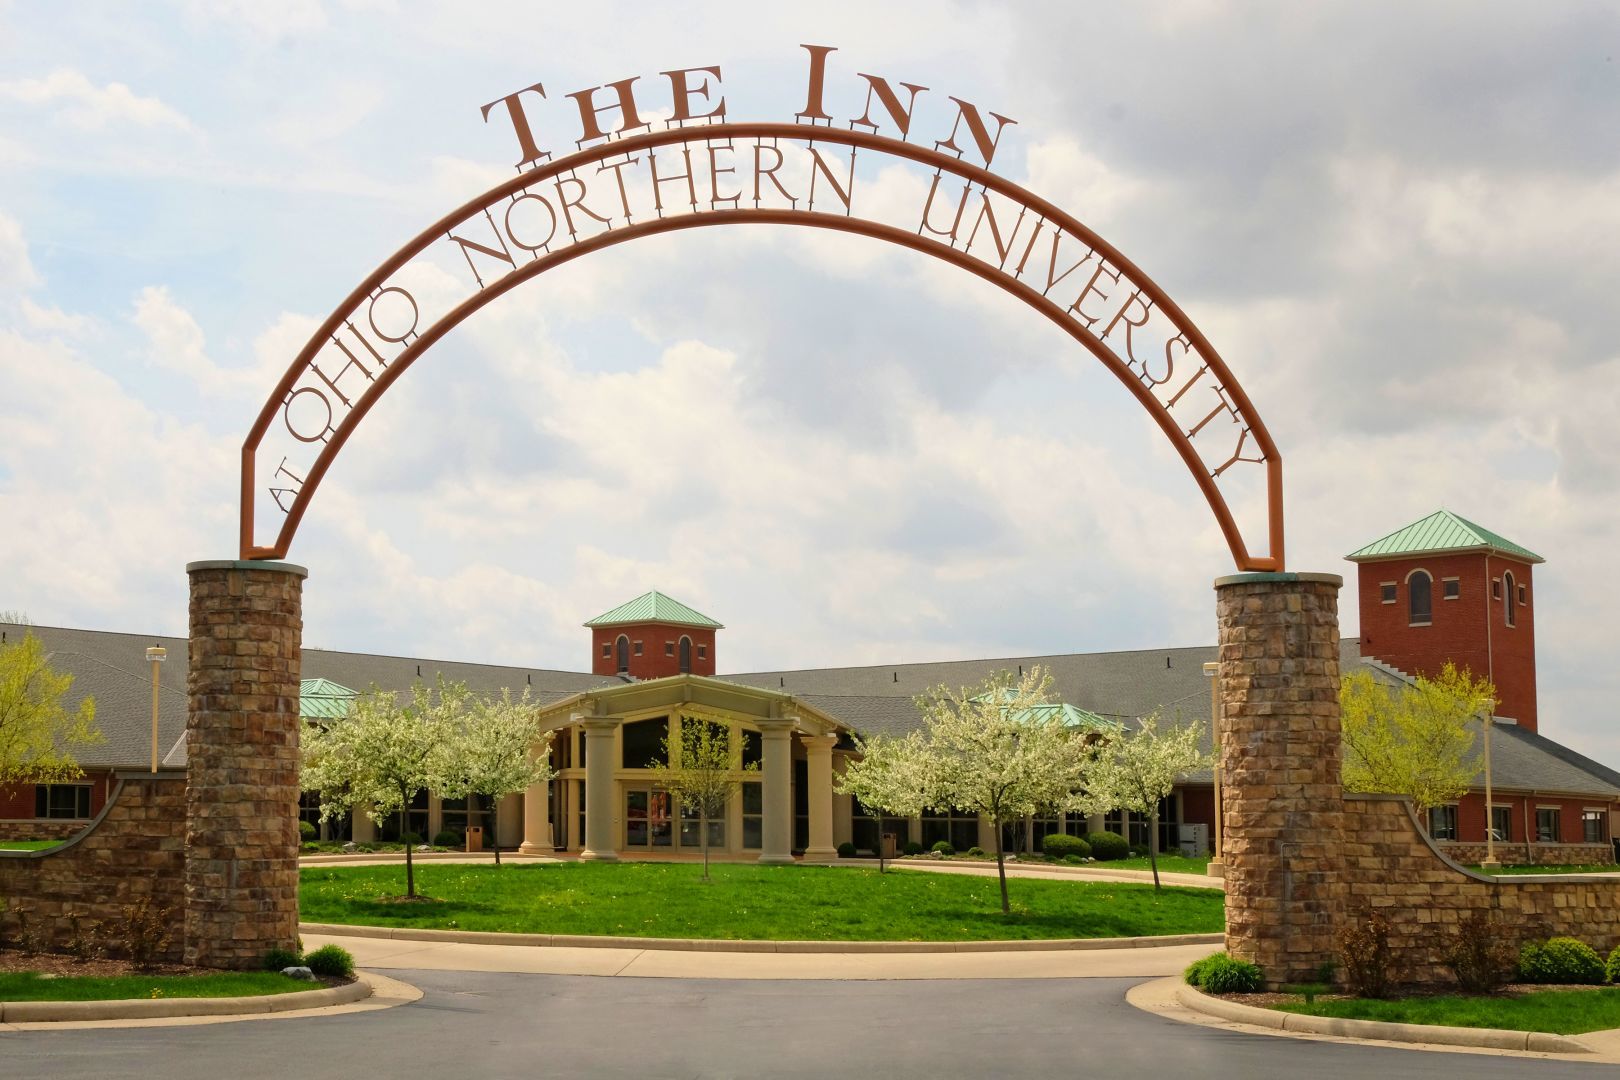 Photo of The Inn at Ohio Northern University, Ada, OH